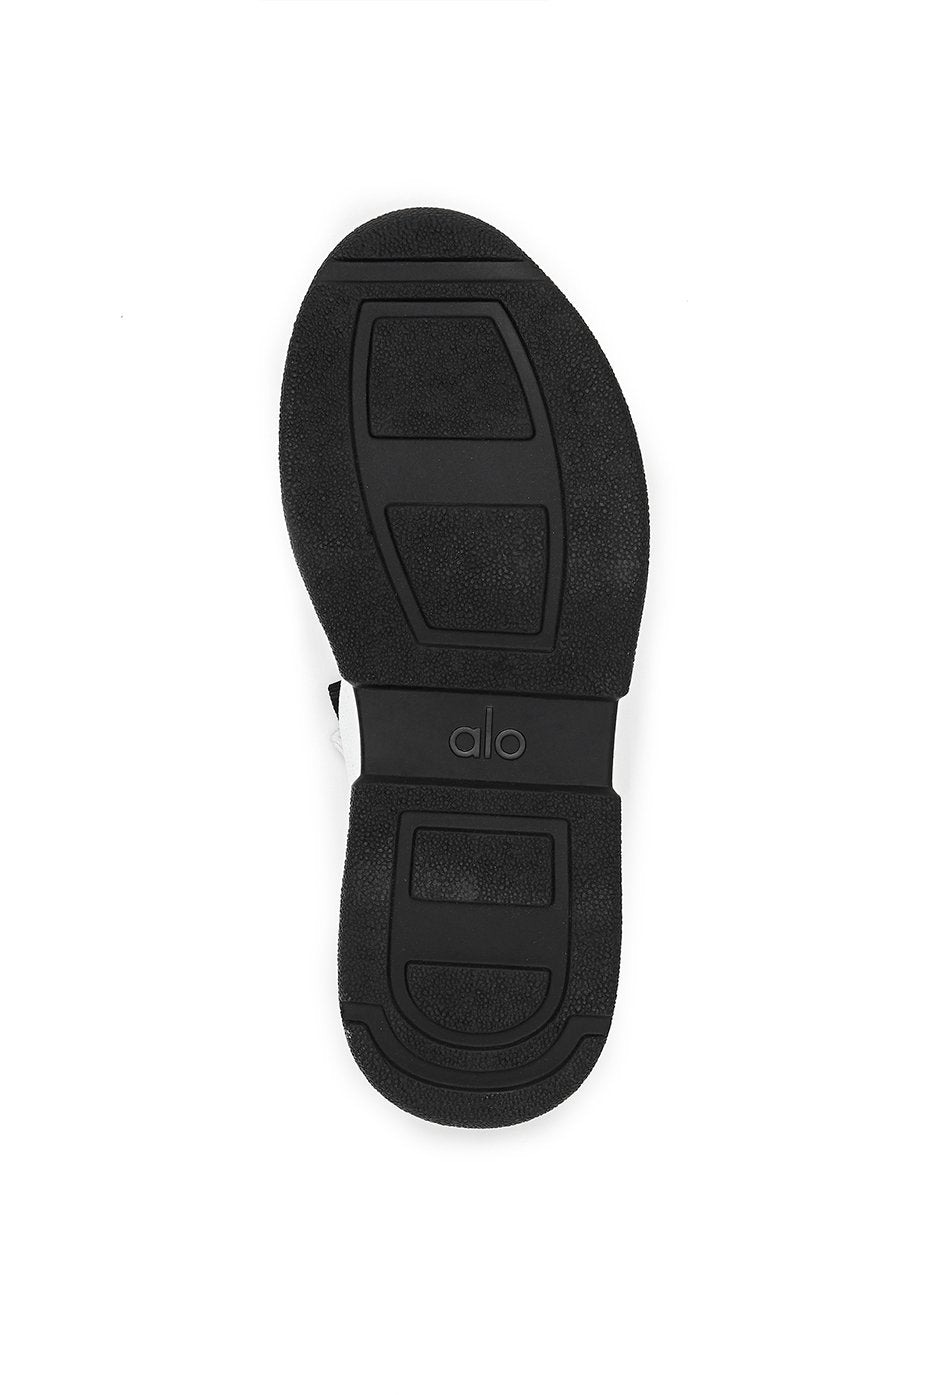 Alo Yoga Velocity Knit Black Sneakers